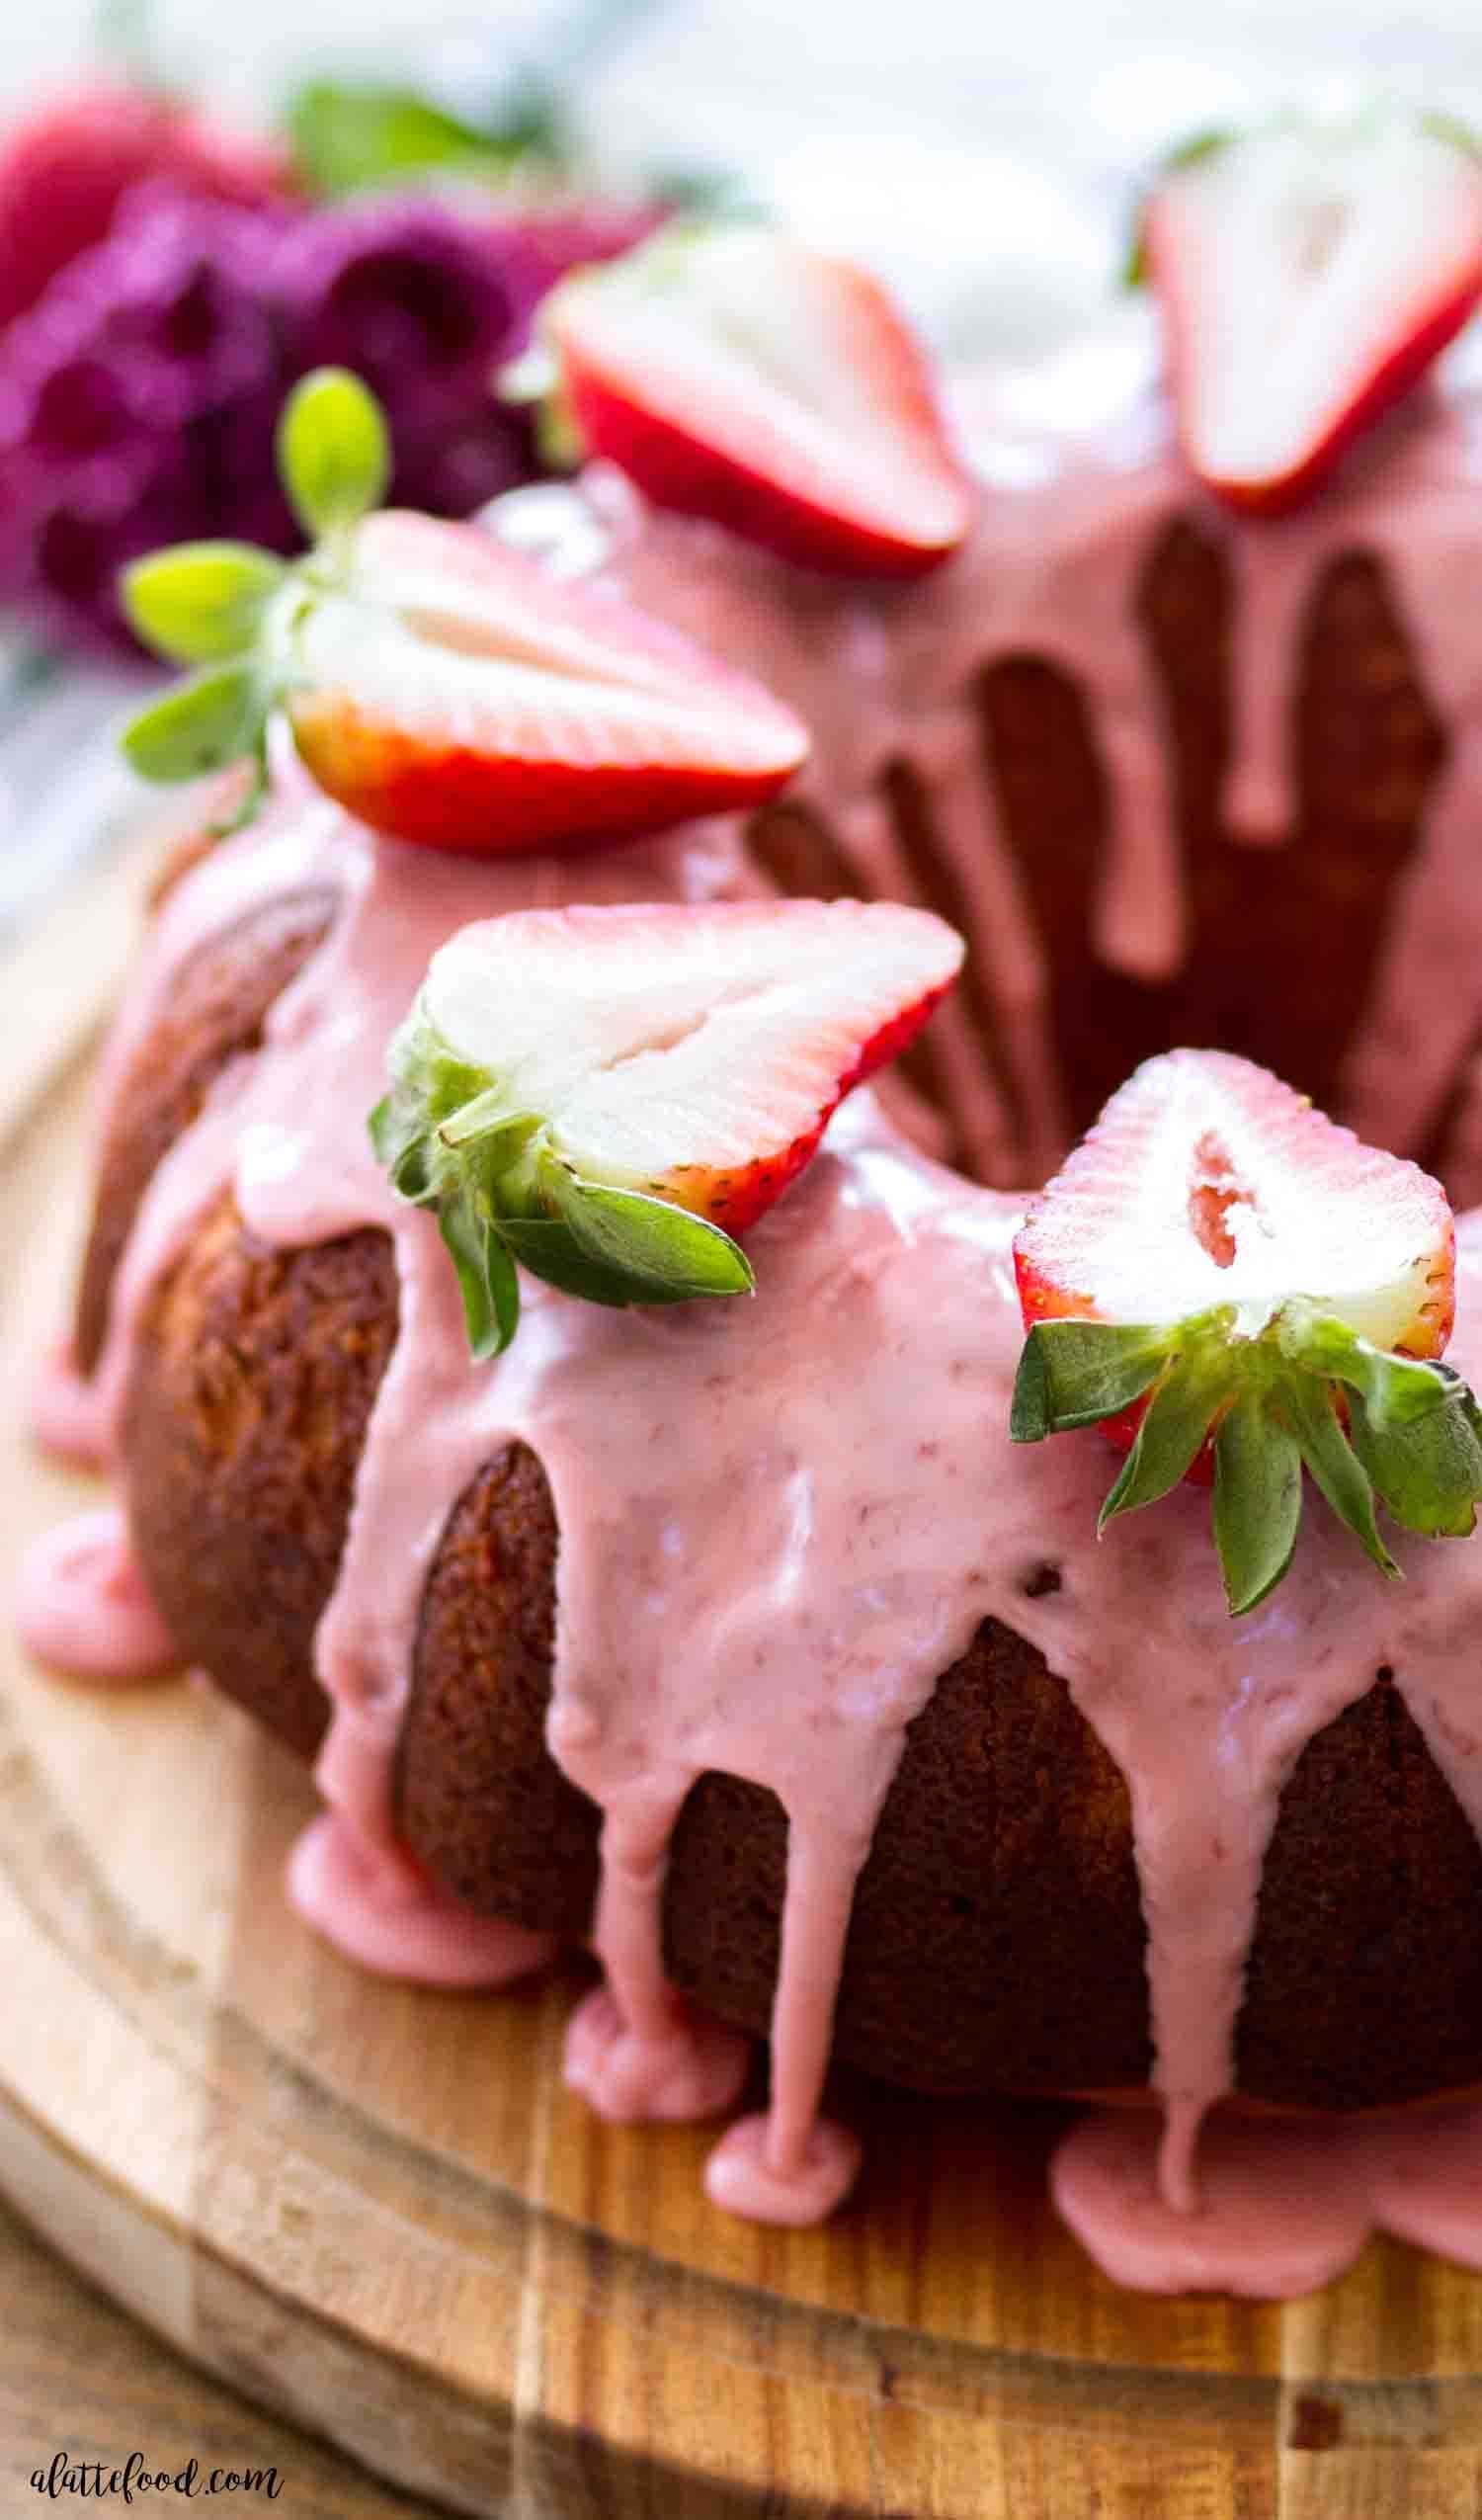 Chocolate bundt cake topped with fresh strawberry and glaze. 